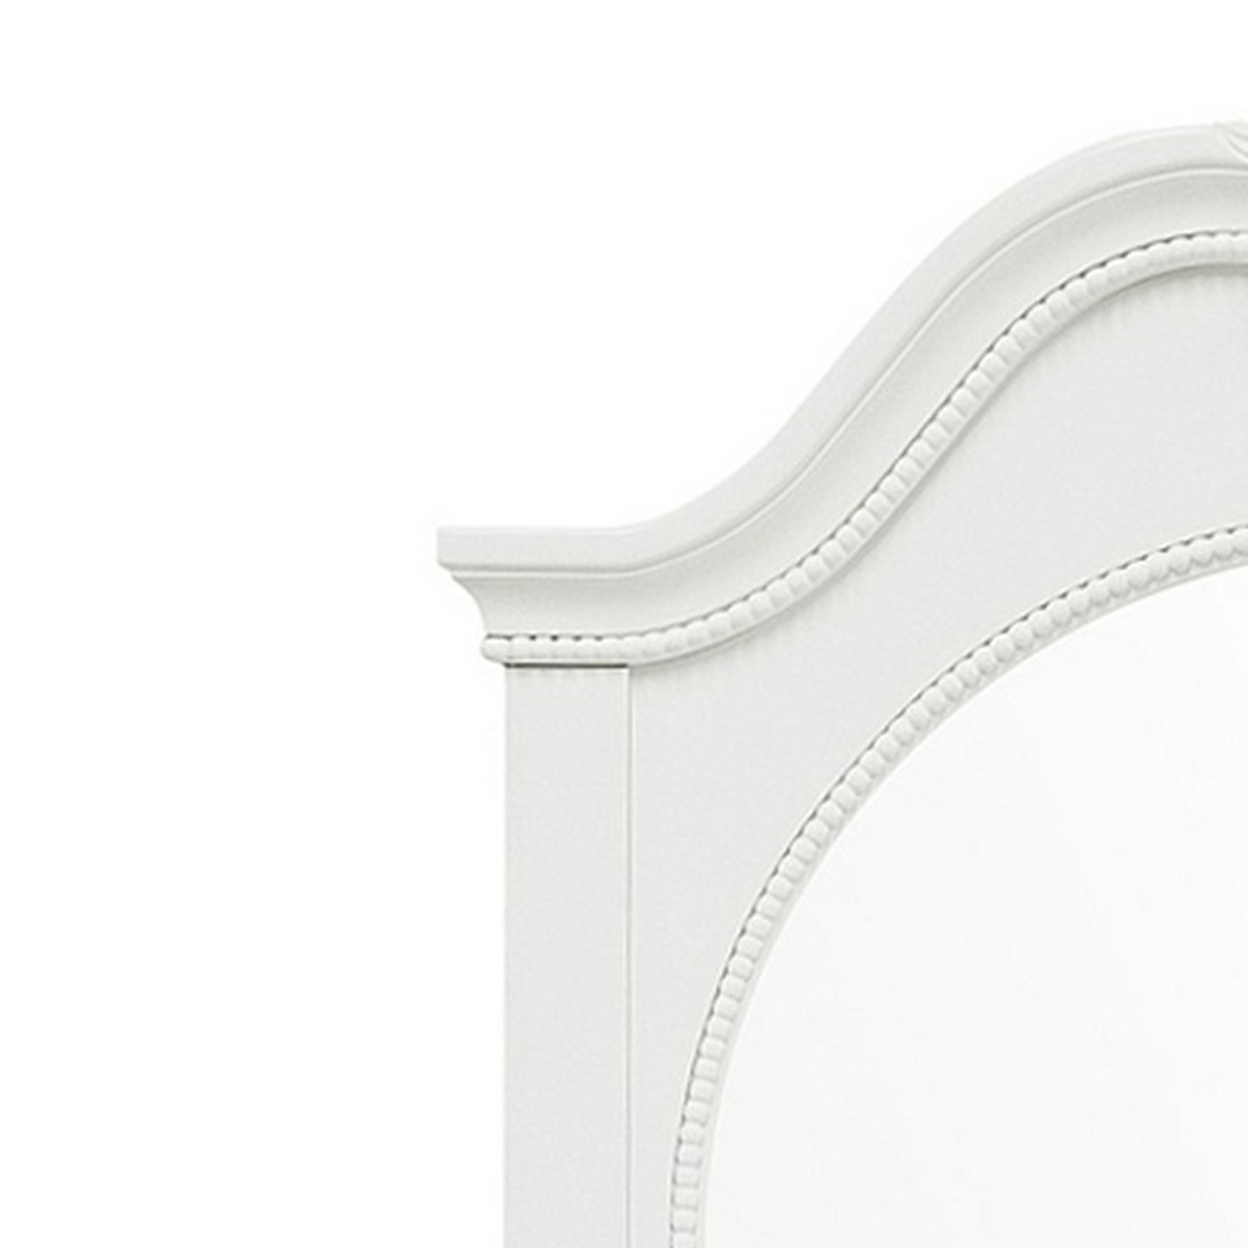 Scallop Design Molded Top Round Mirror With Beaded Design, White- Saltoro Sherpi